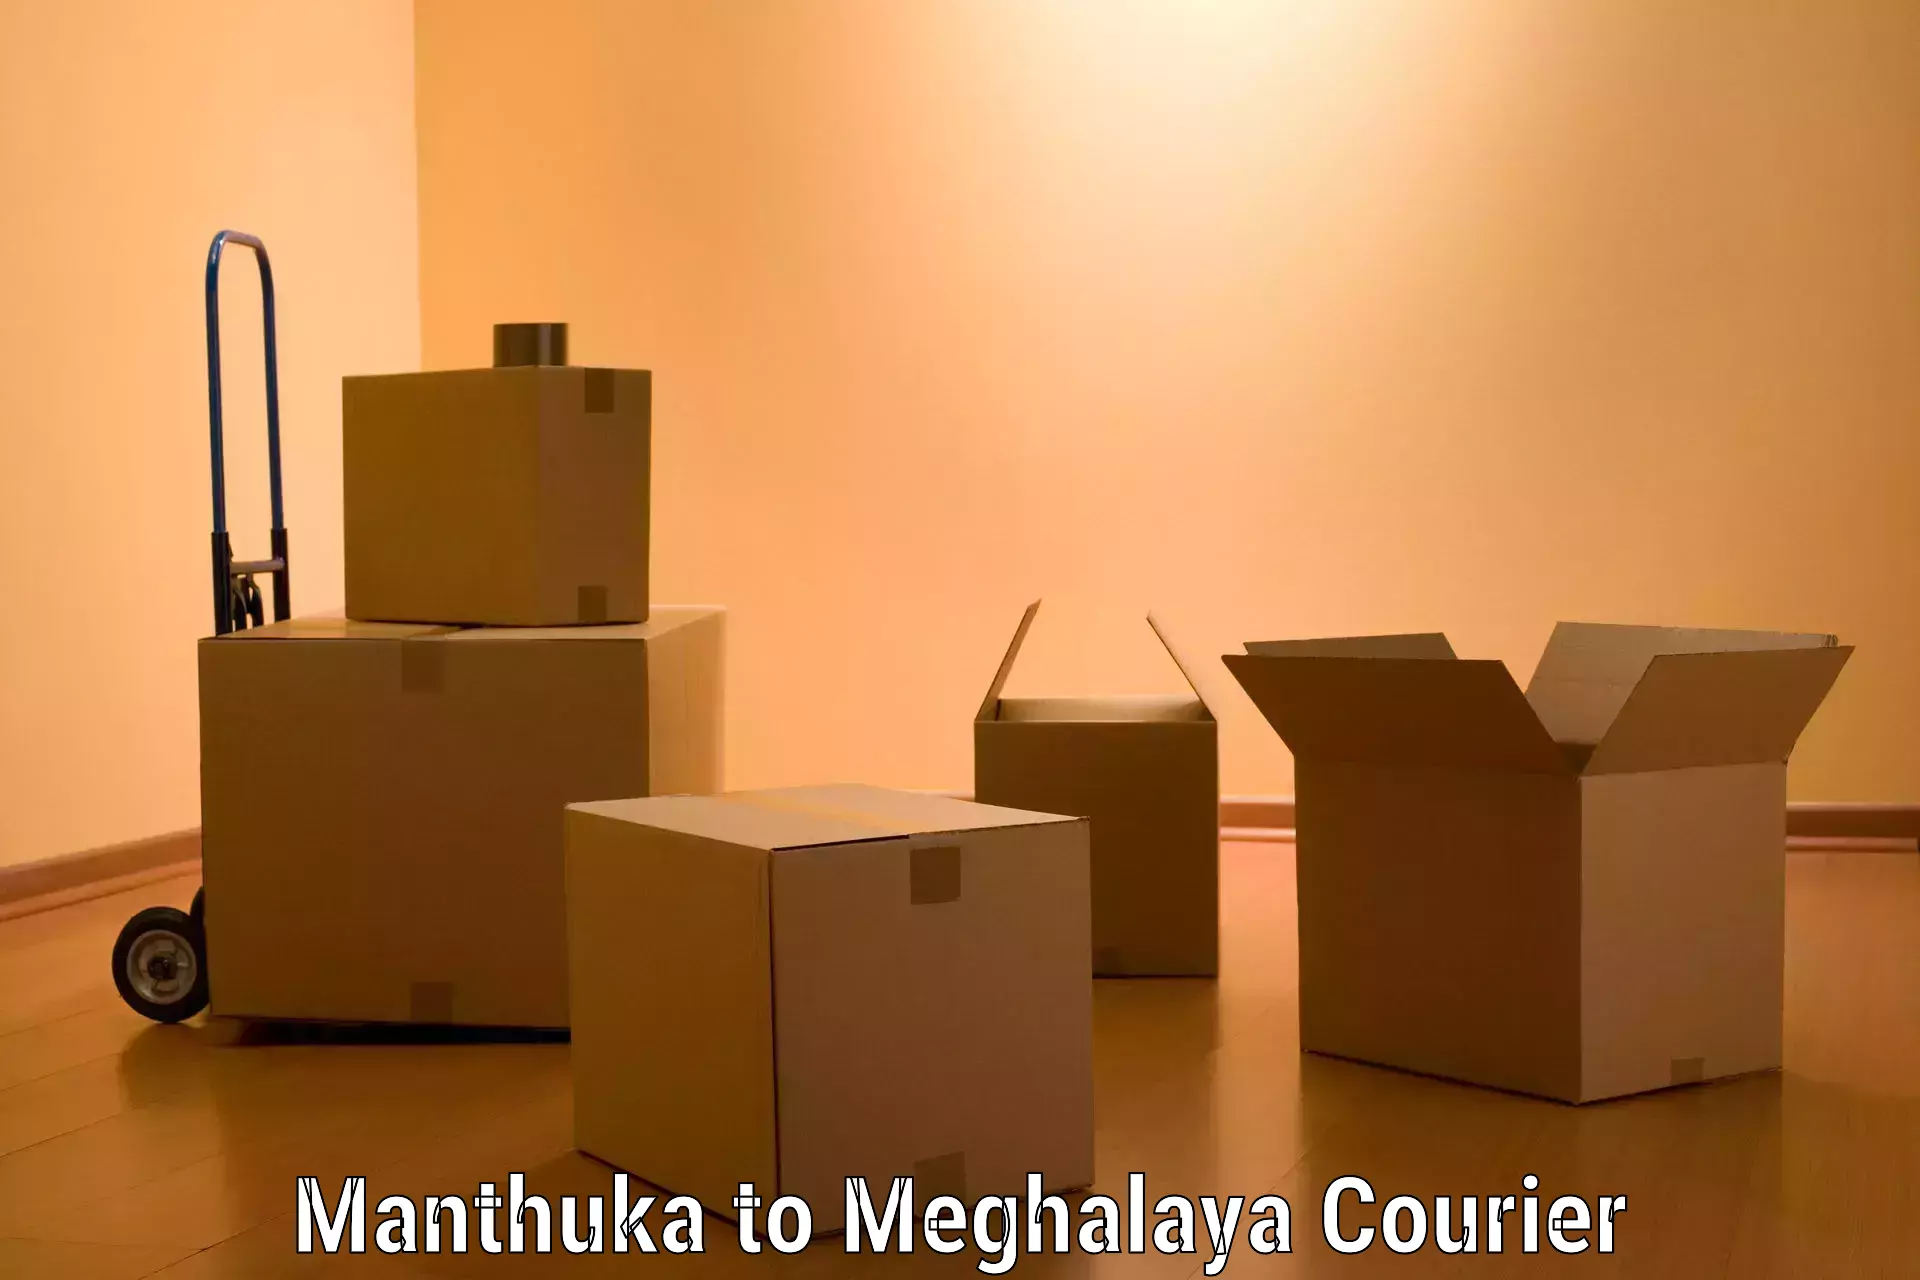 Moving and packing experts Manthuka to Meghalaya